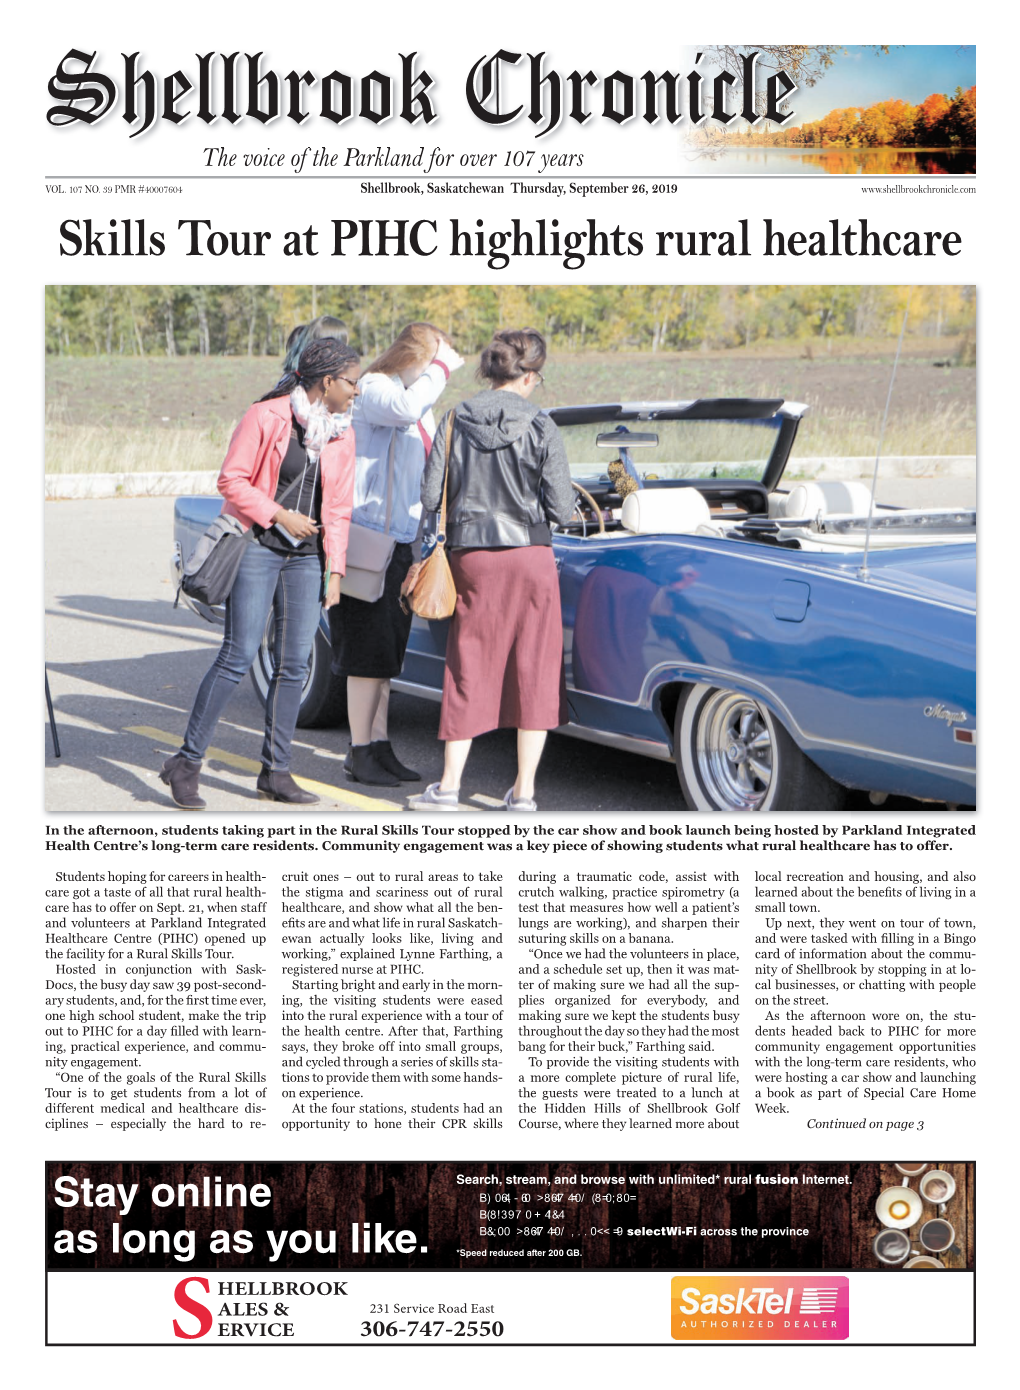 Skills Tour at PIHC Highlights Rural Healthcare